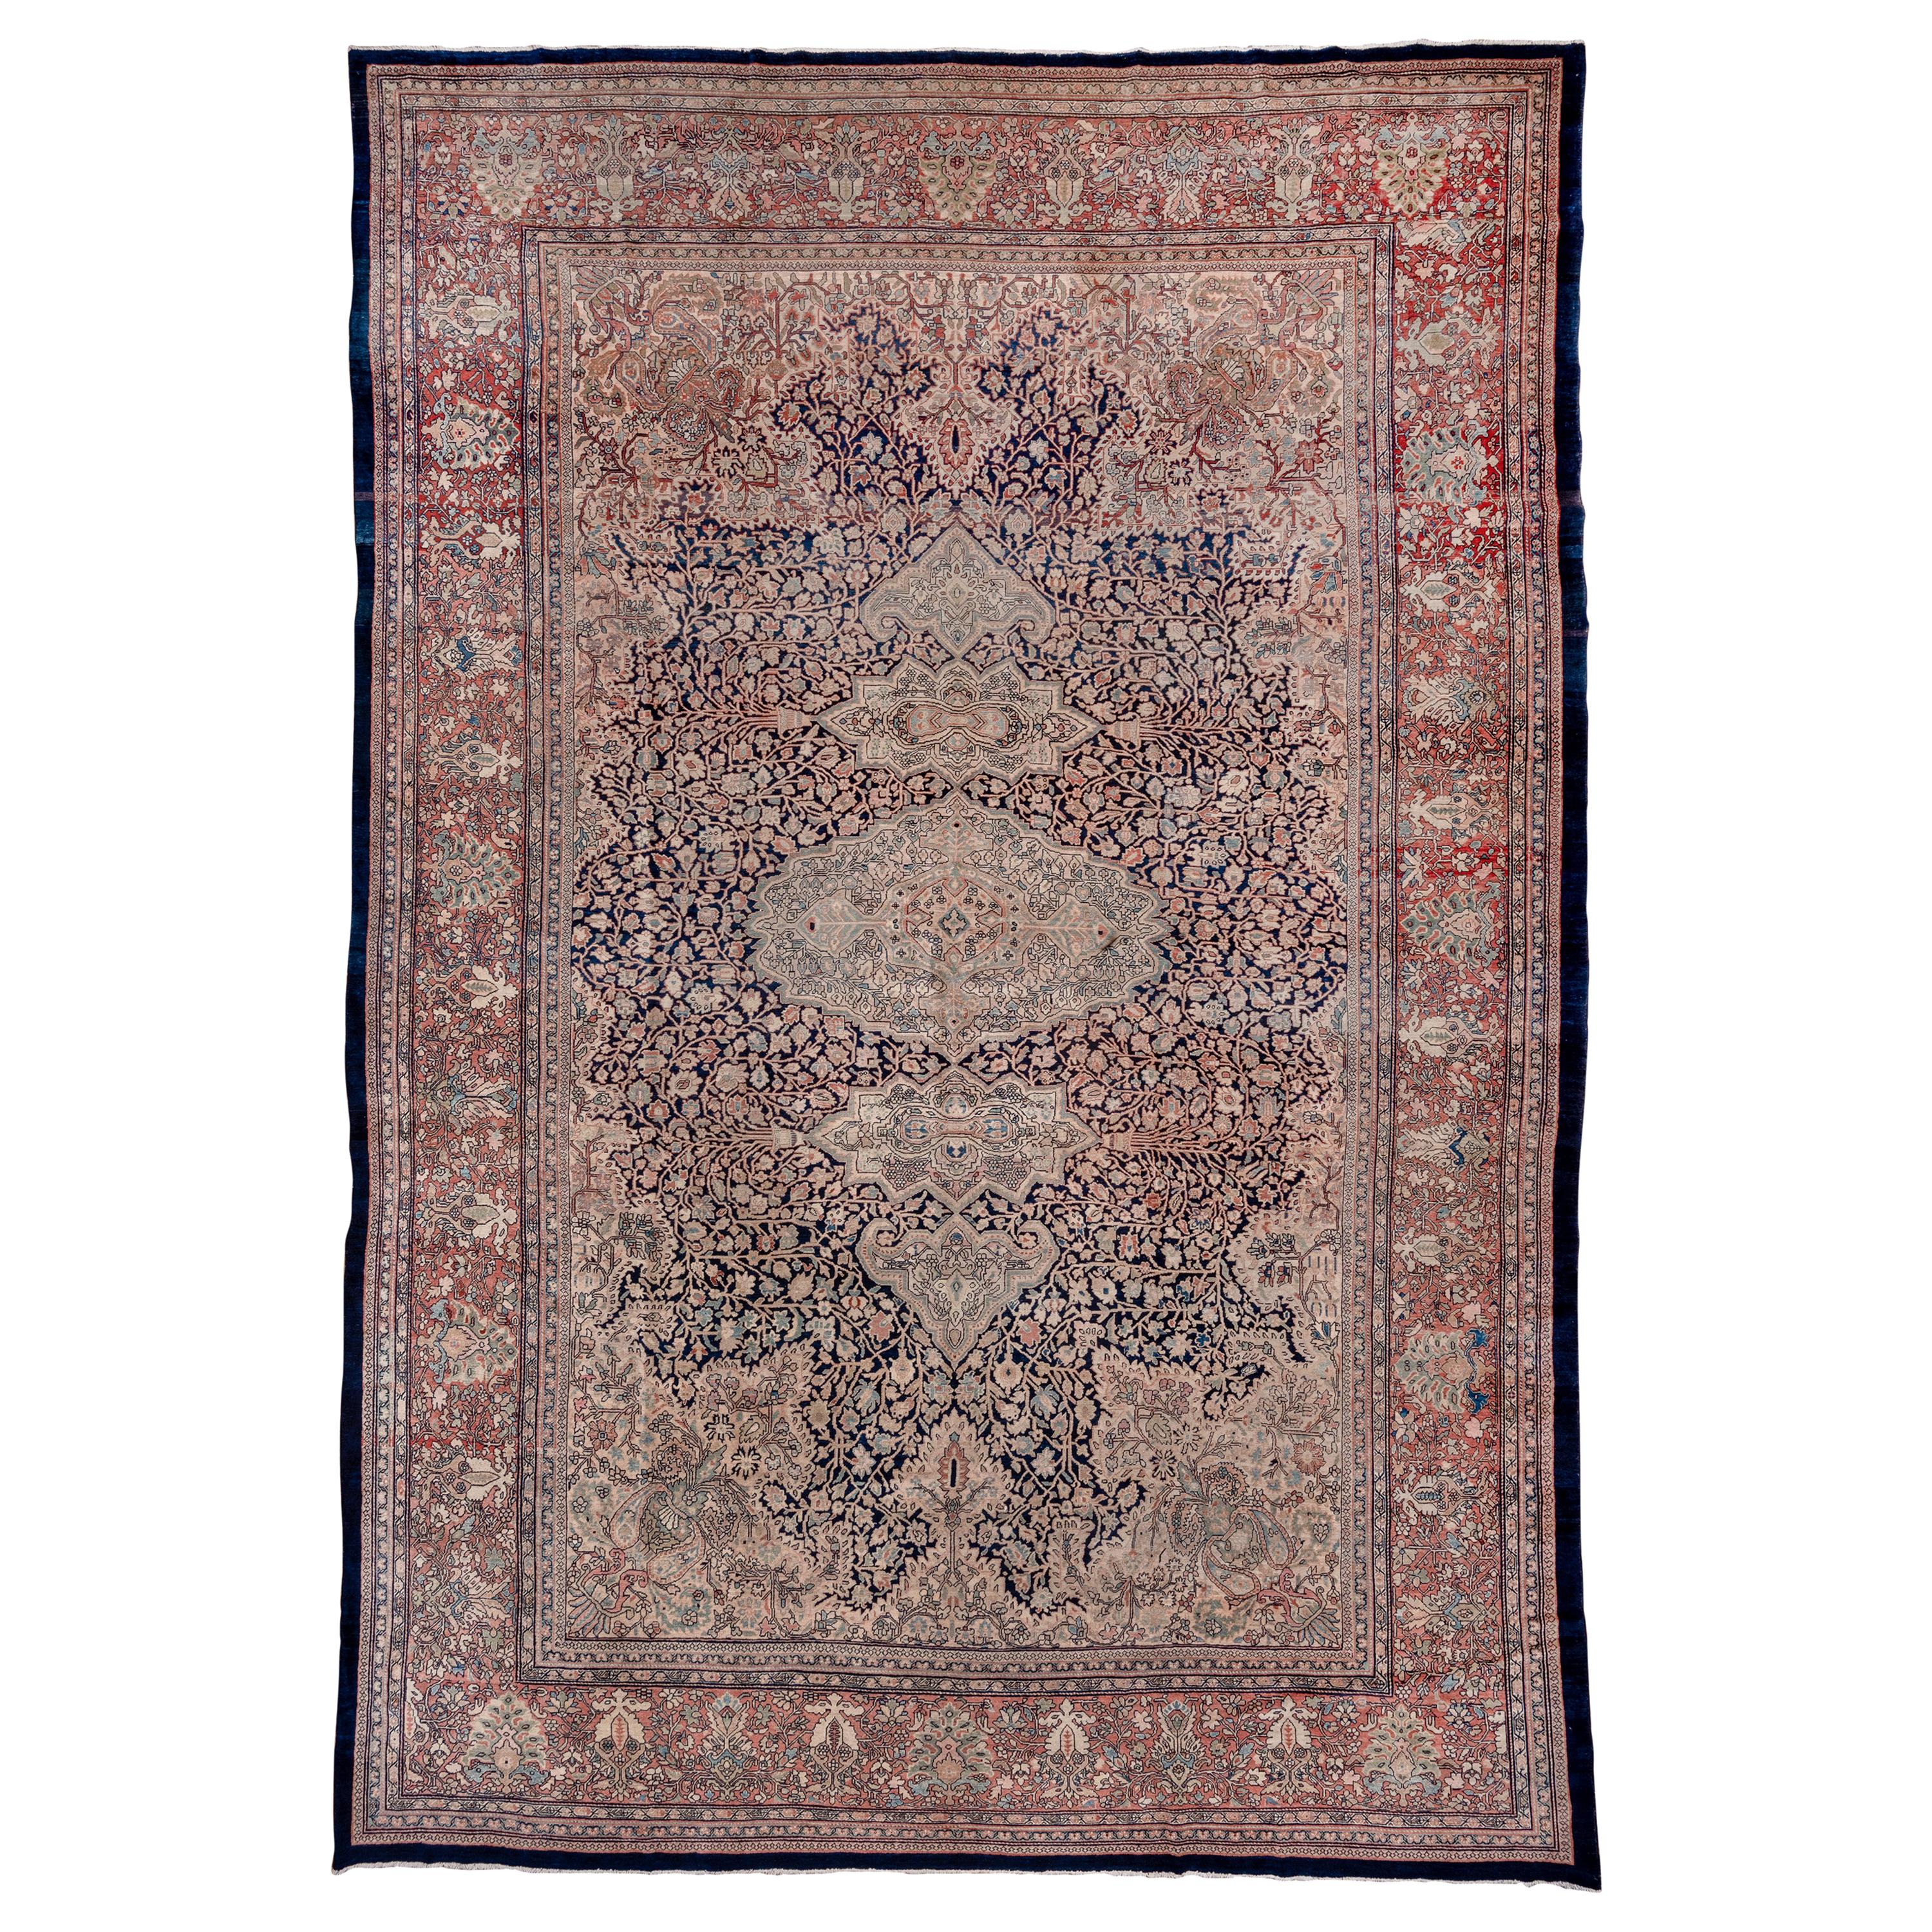 Antique Farahan Sarouk Carpet, Navy and Ivory Field, Salmon Pink Borders